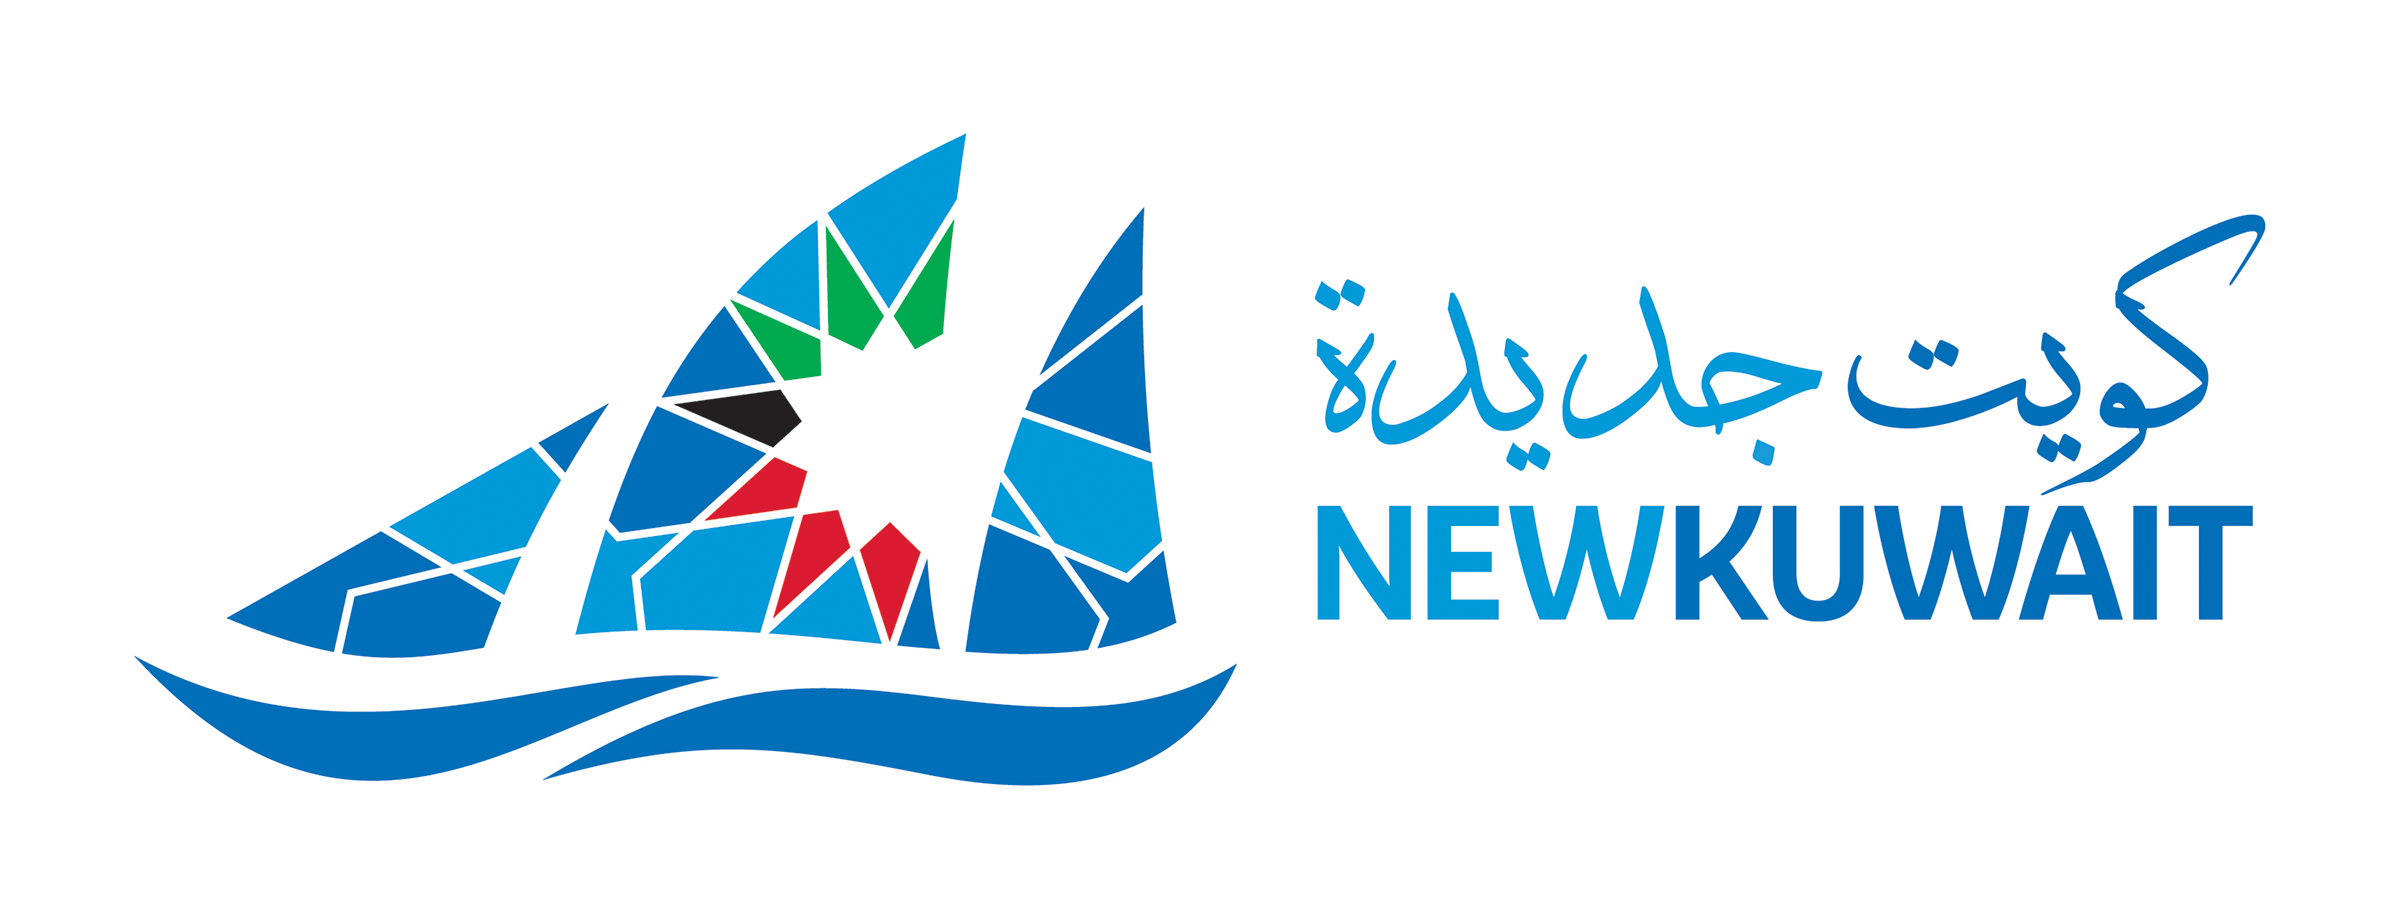 Kuwait Logo - Best Kuwait Logo Photo 2017